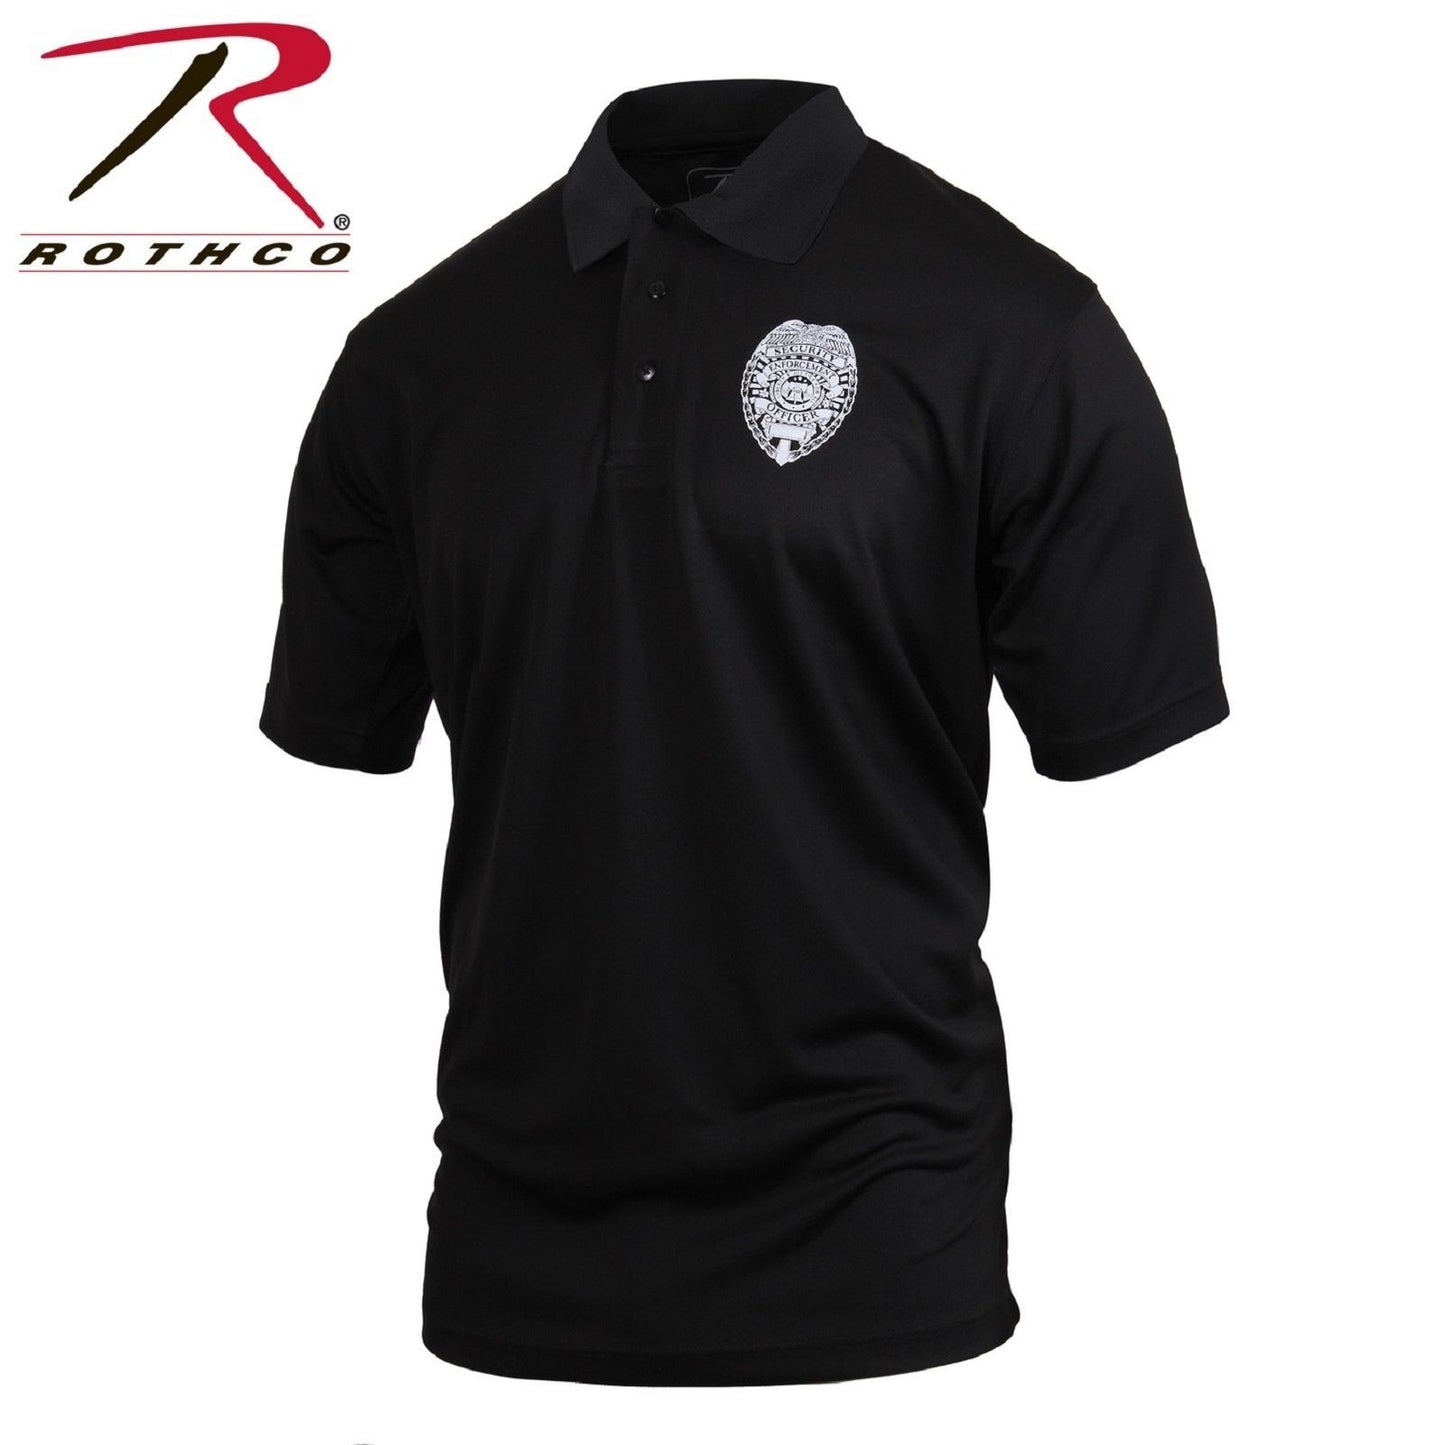 Mens Black SECURITY Print Badge Moisture Wicking Lightweight Polo Golf Shirt